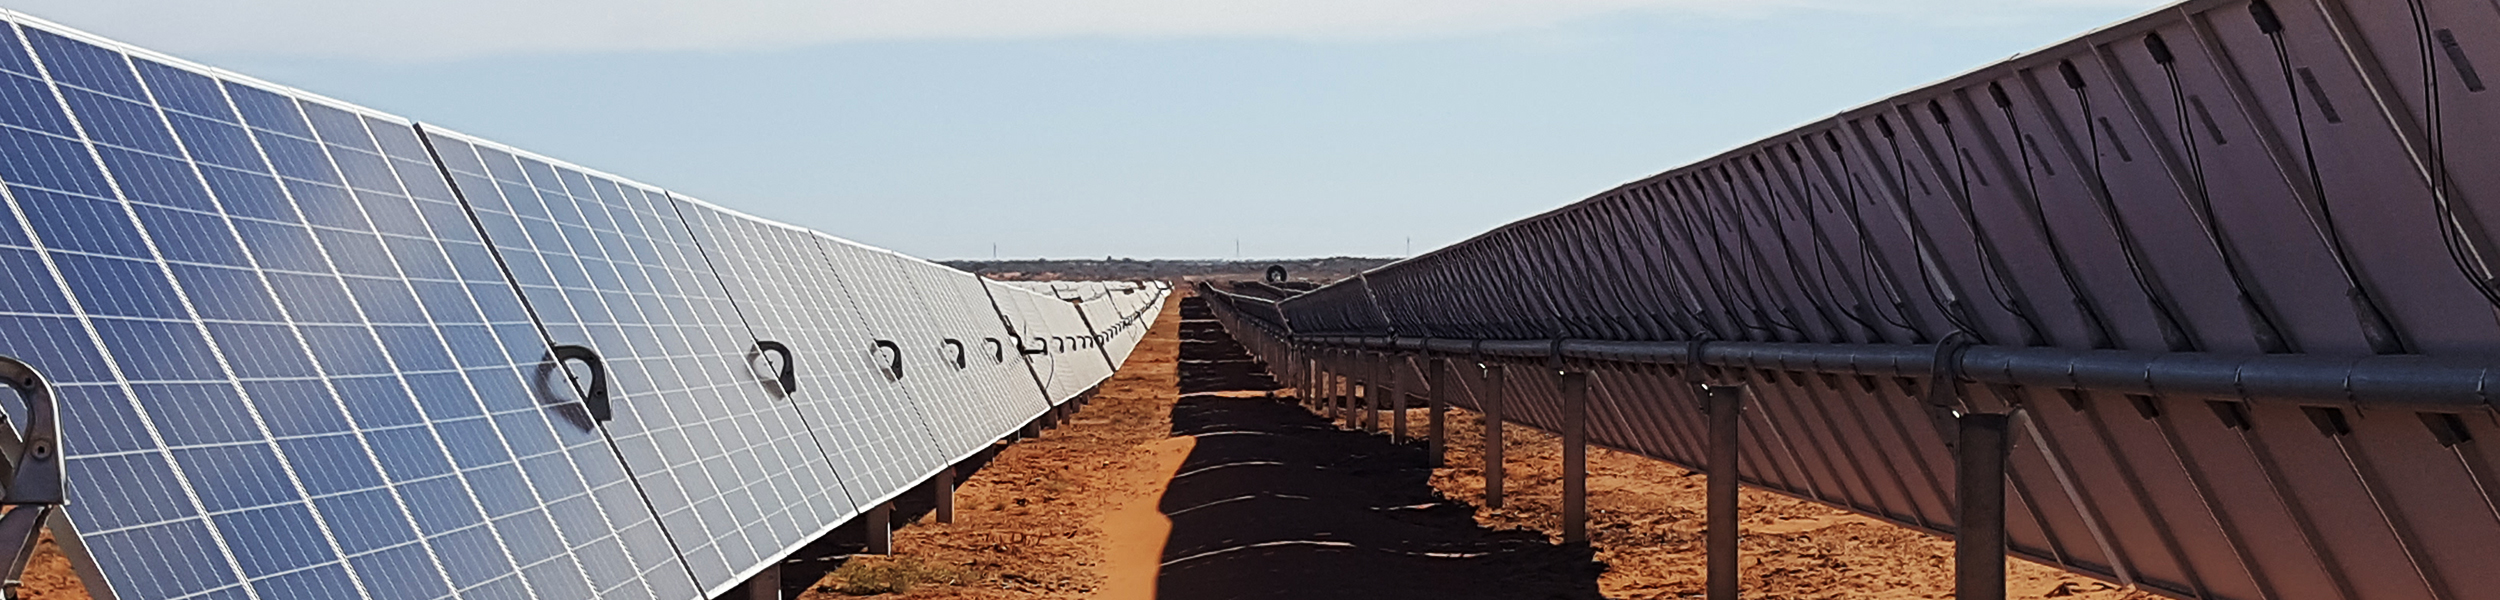 DRASOL Solar project